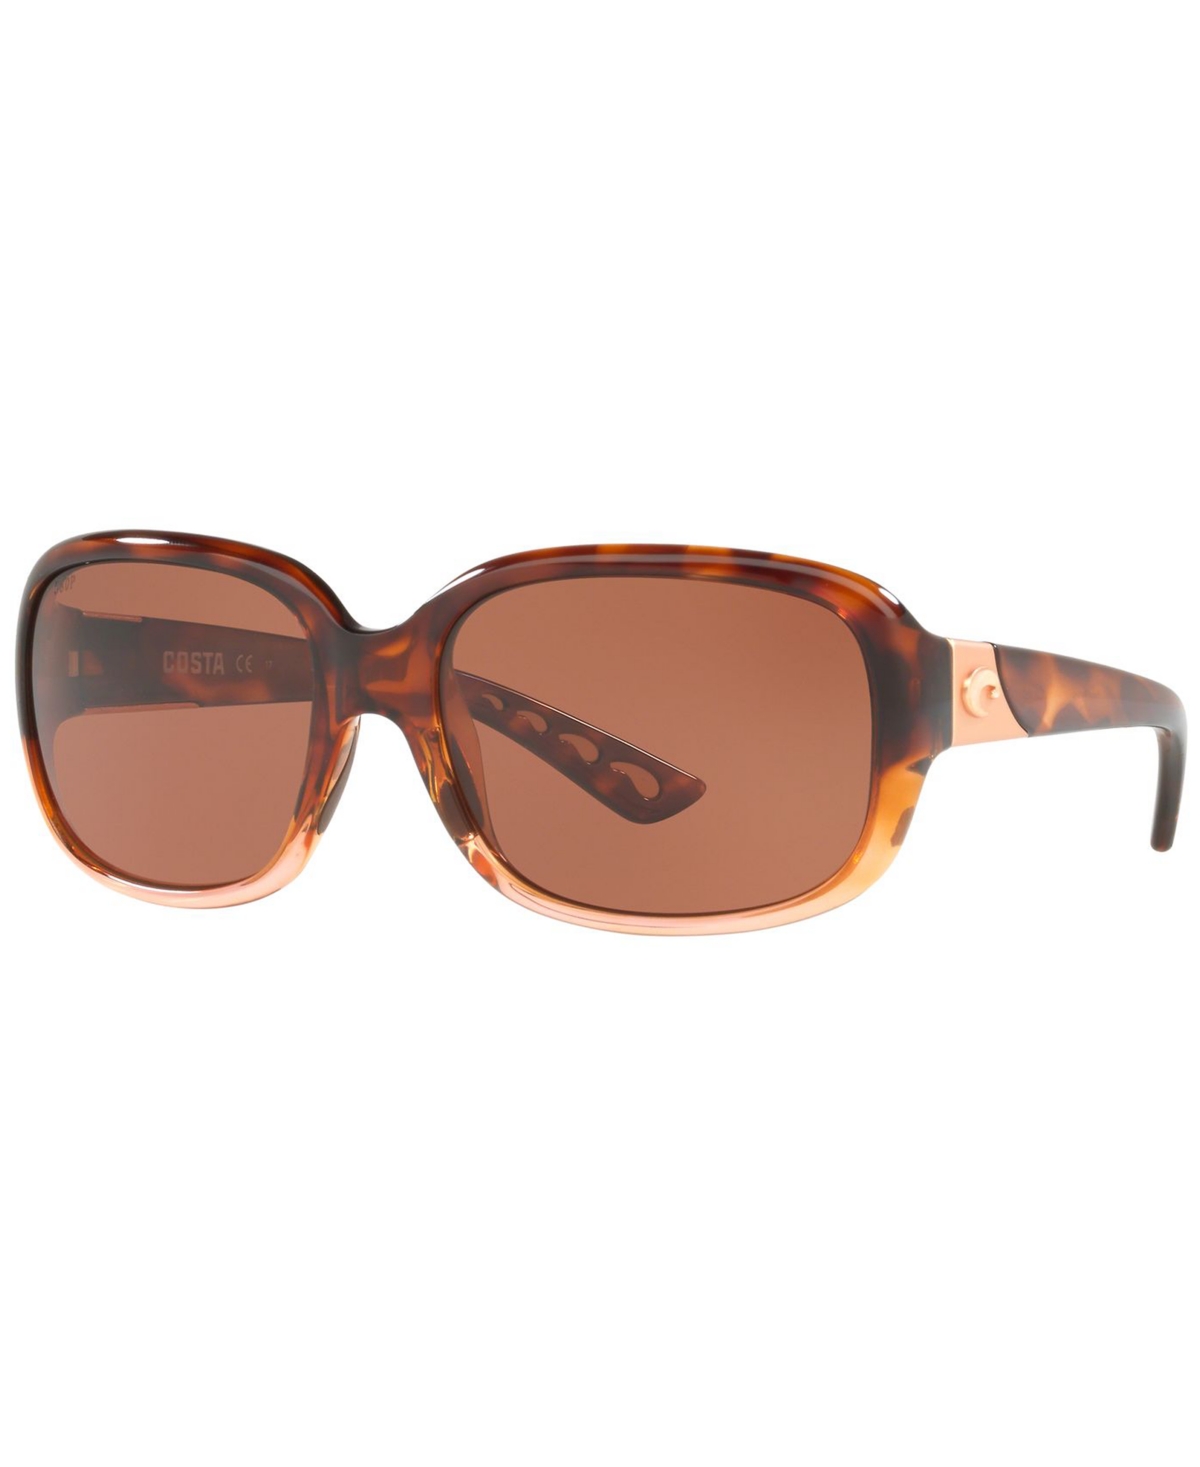 Costa Del Mar Polarized Sunglasses, Gannet 58